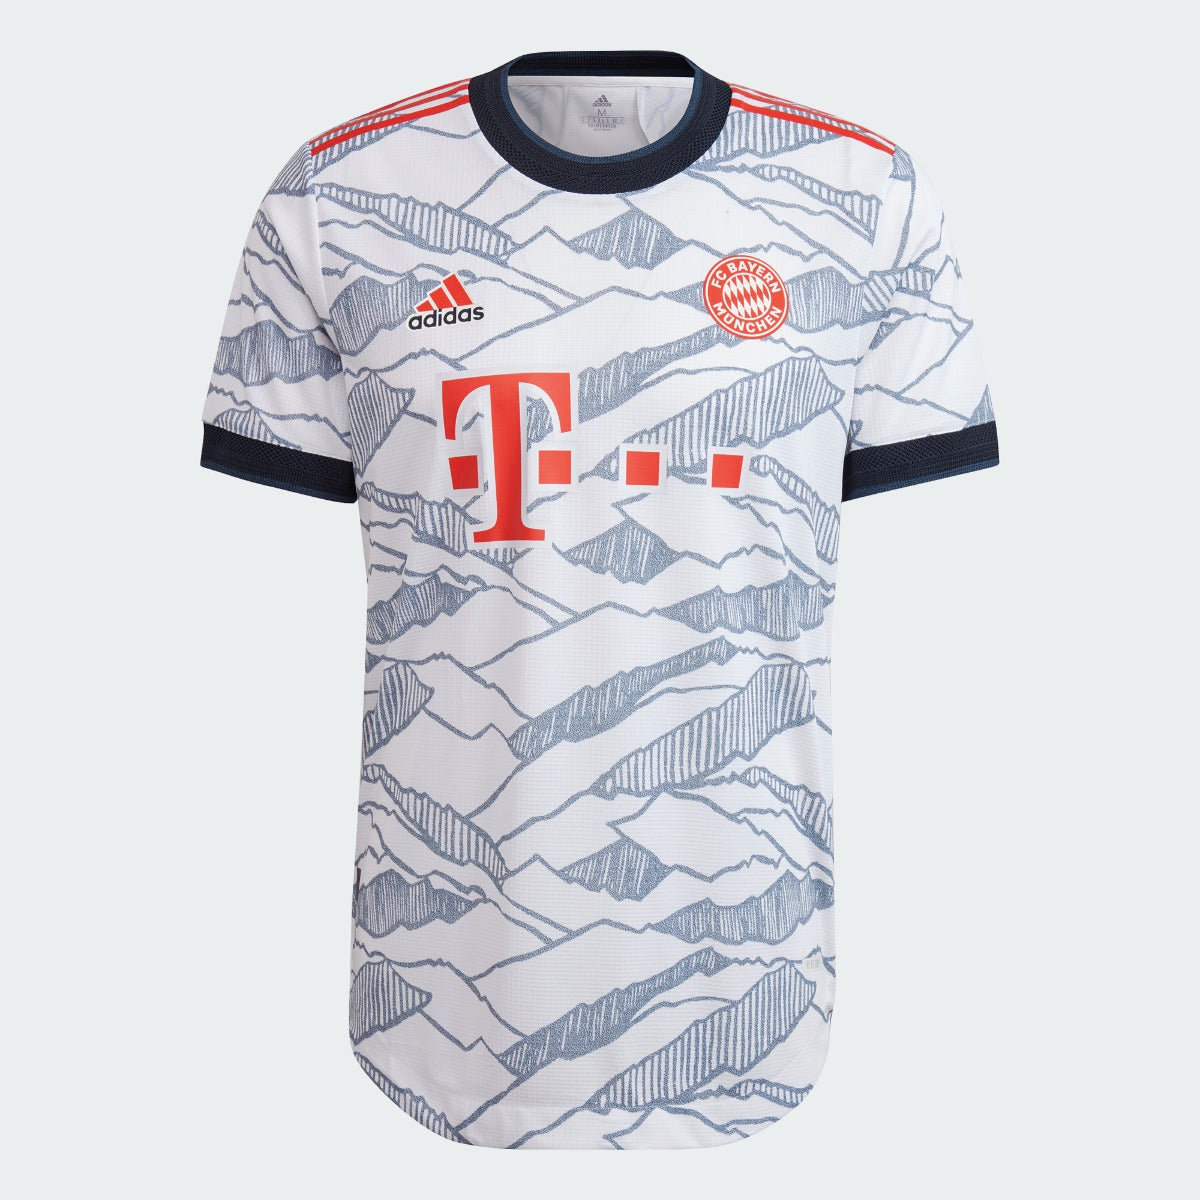 Adidas 2021-22 Bayern Munich Authentic Third Jersey - White